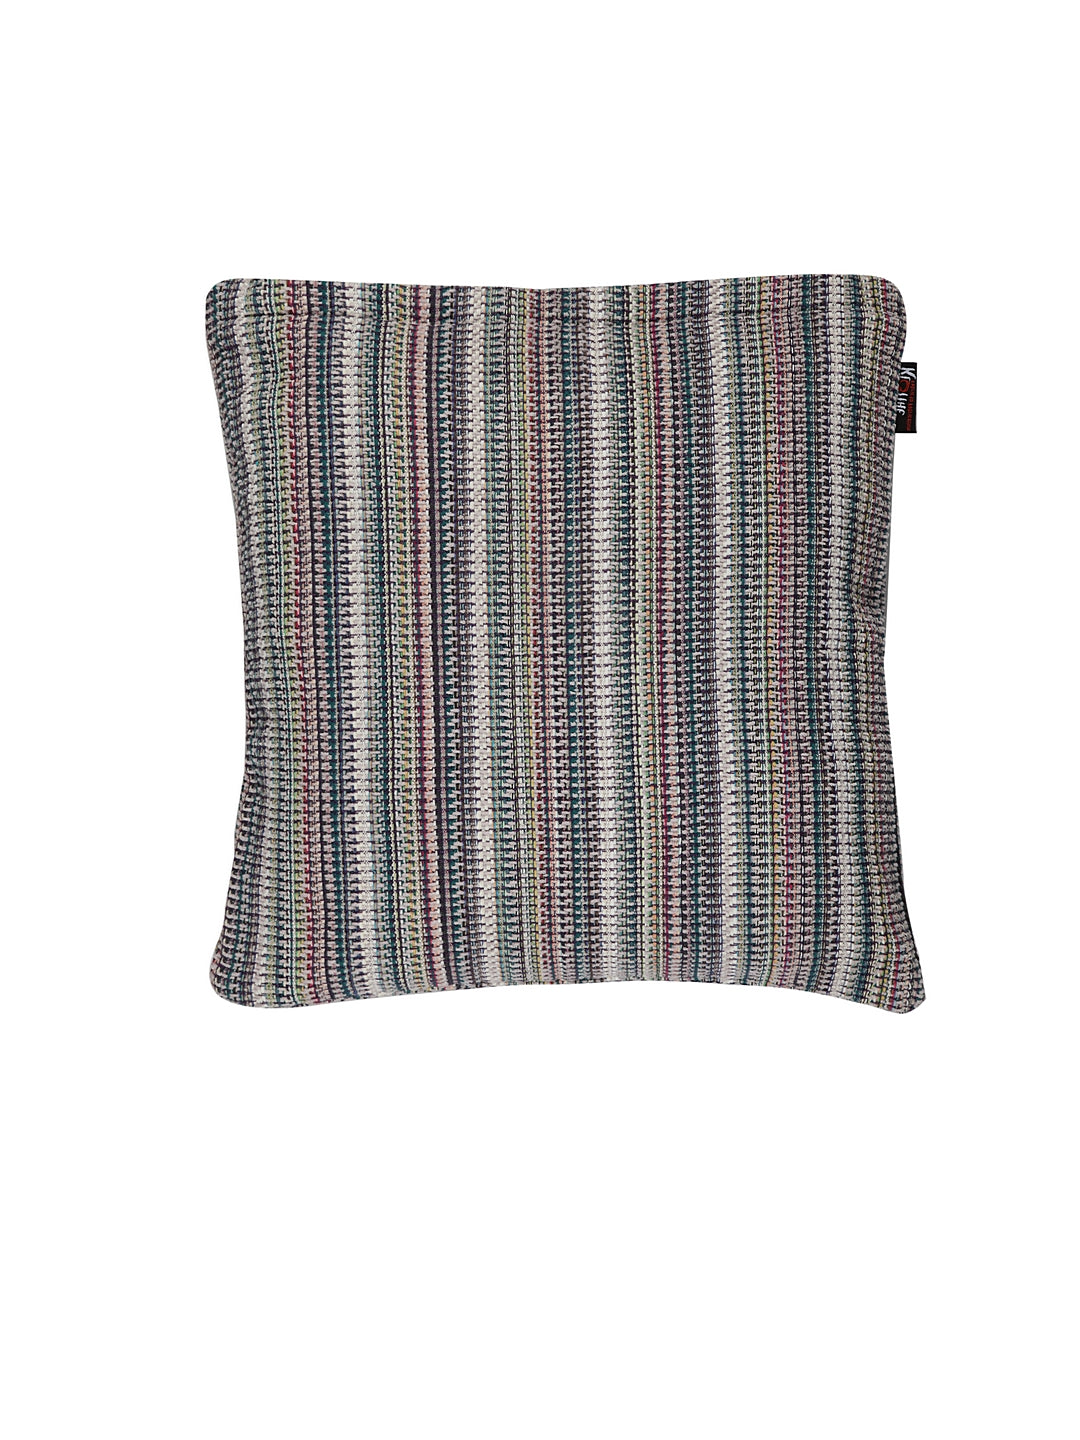 KLOTTHE Set of 5 Multi Cotton Self Design Cushion Covers (40X40 cm)